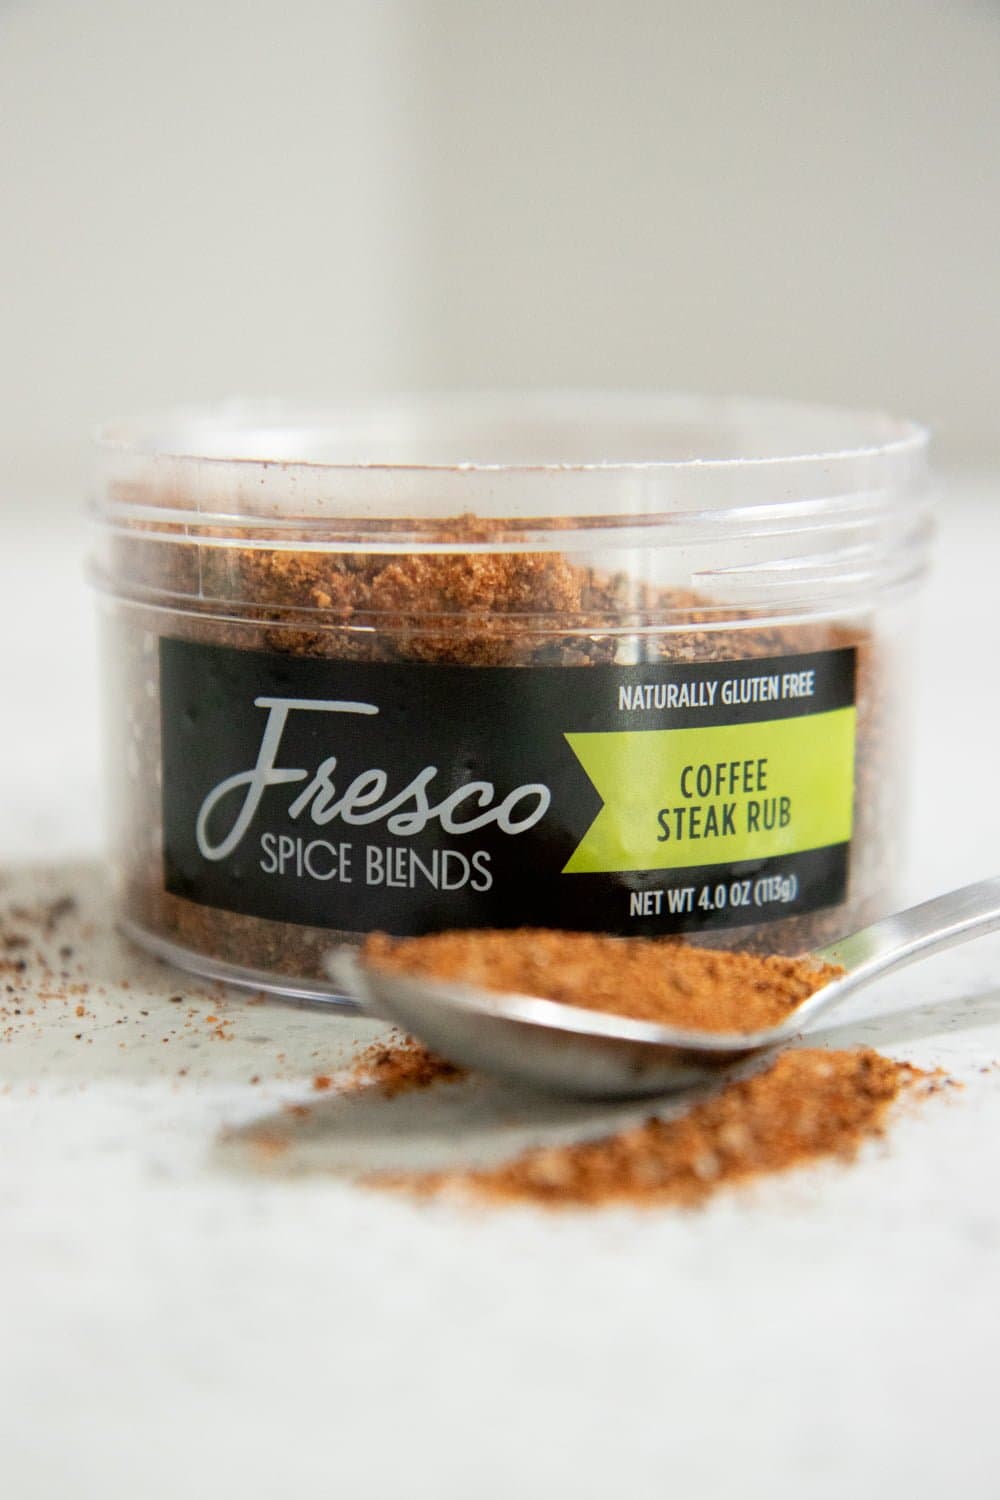 Jar of Fresco Spice Blends - Coffee Steak Rub flavor